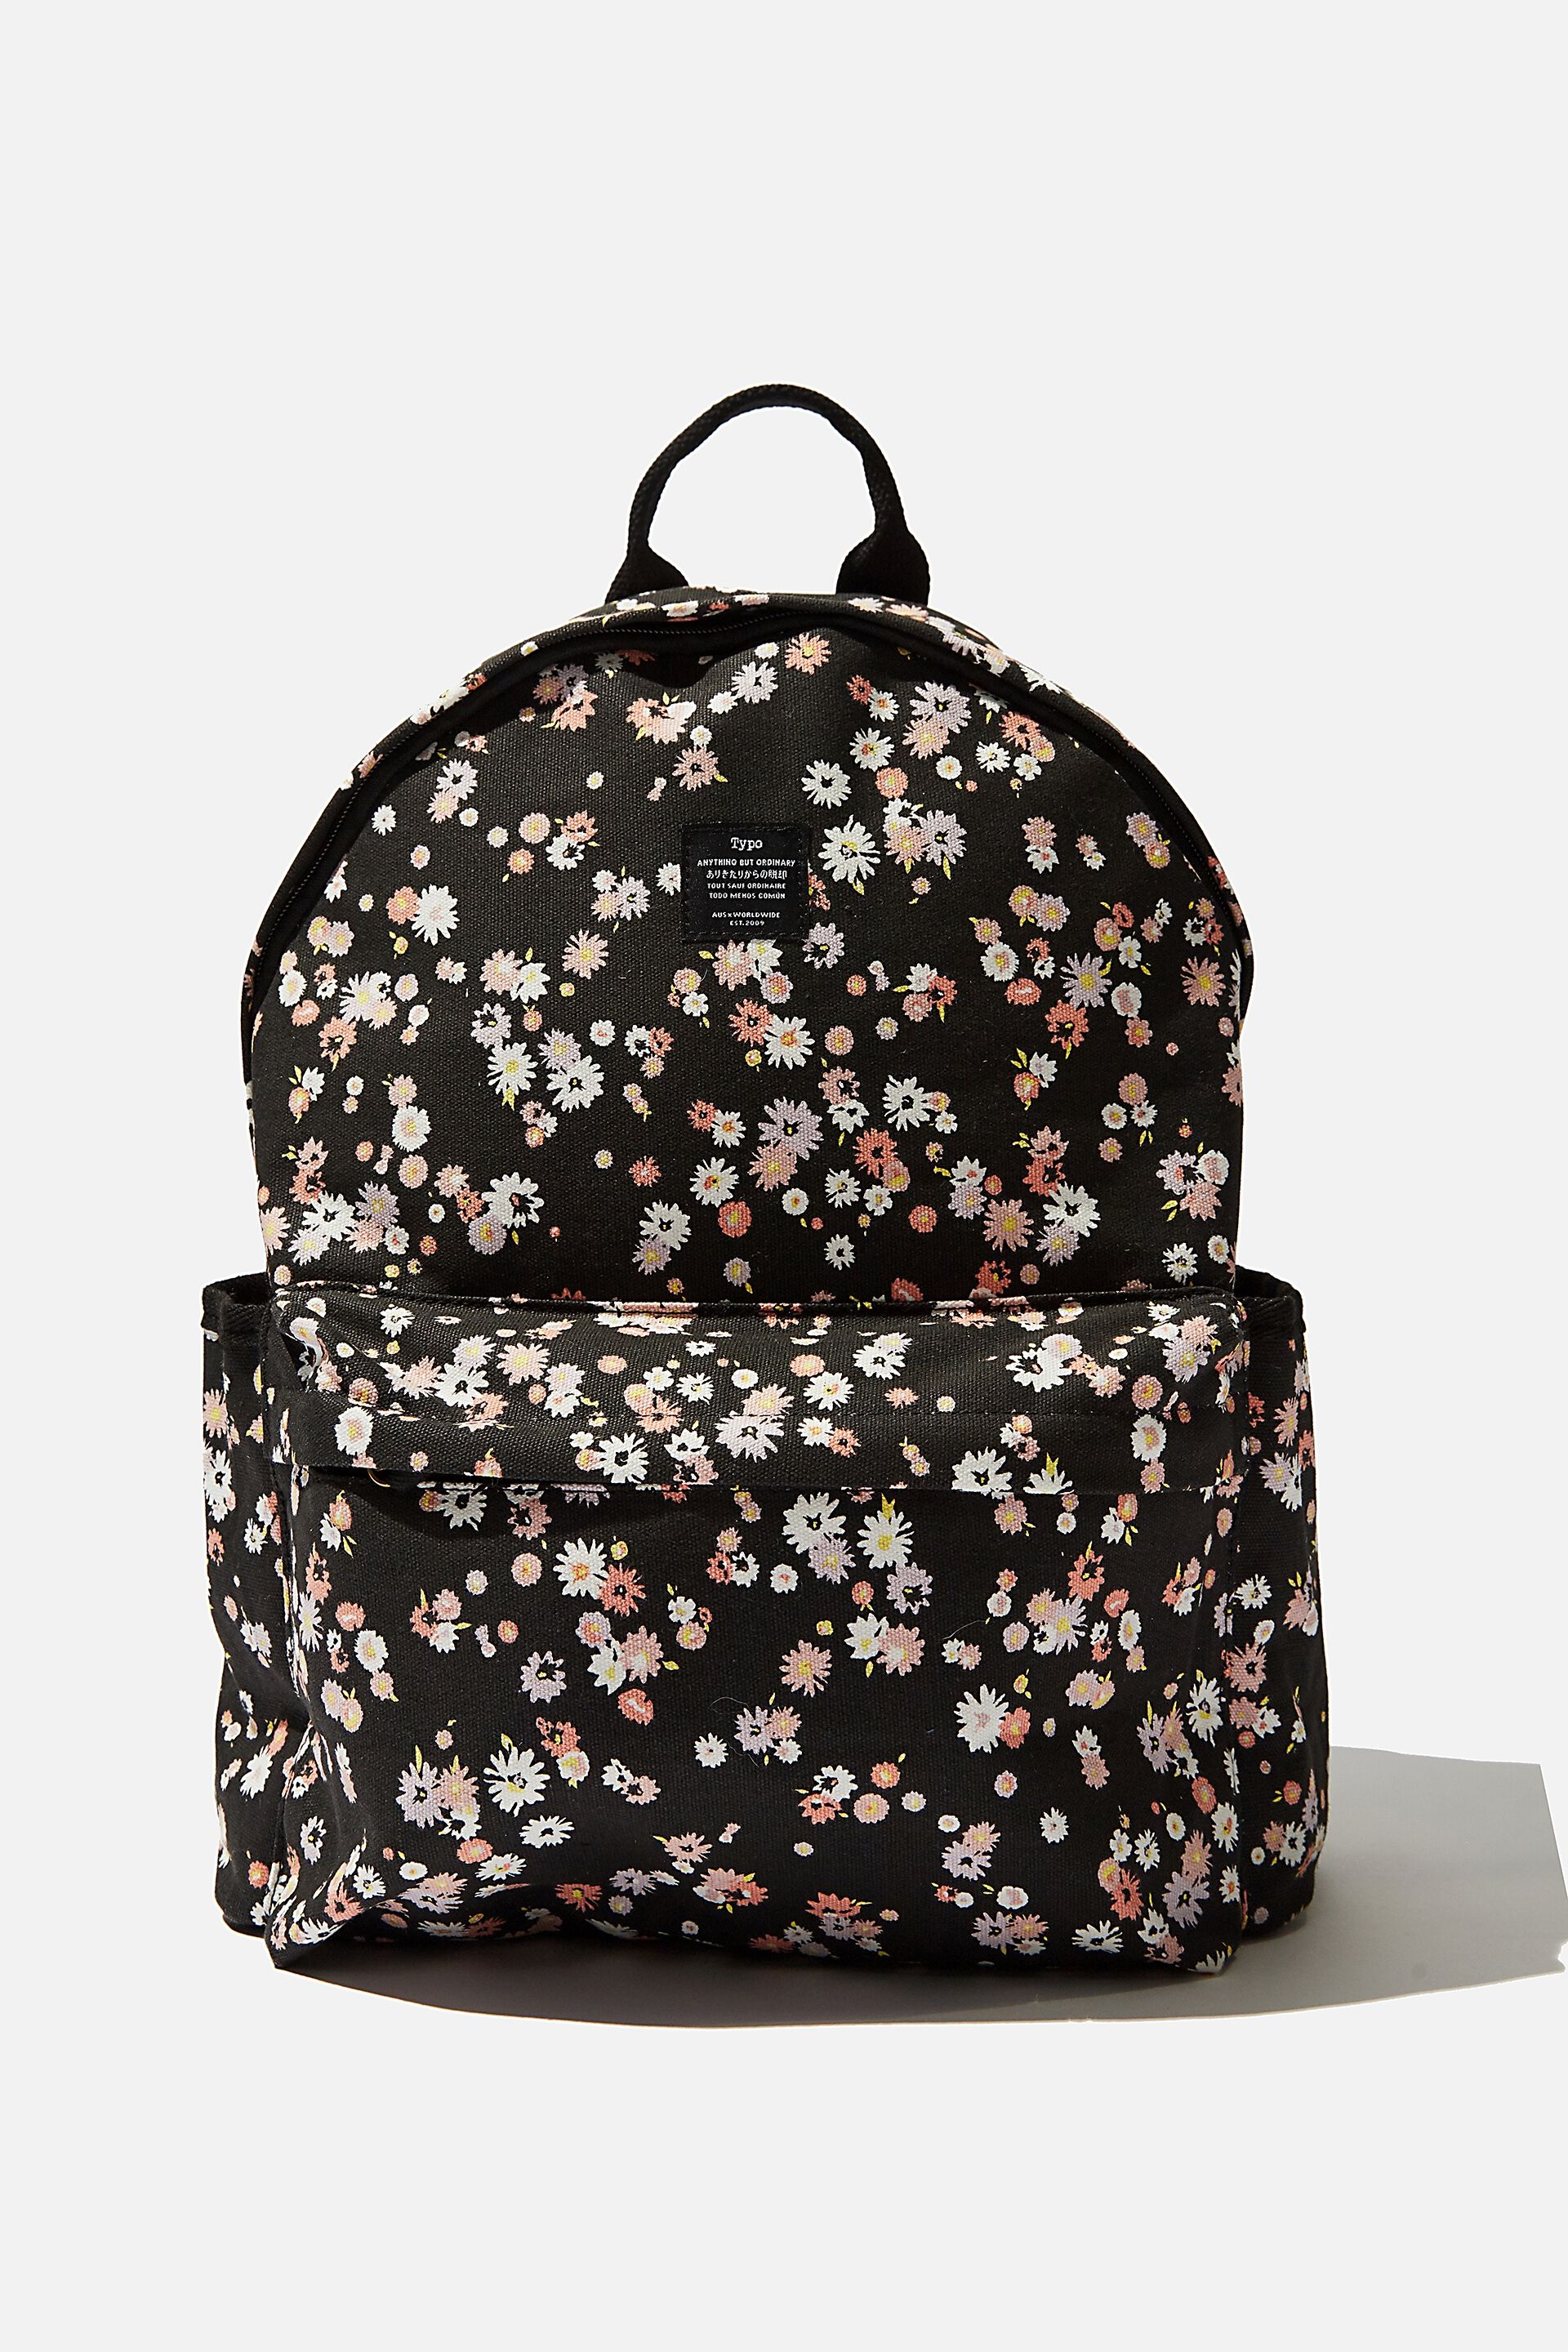 mini backpacks under $20